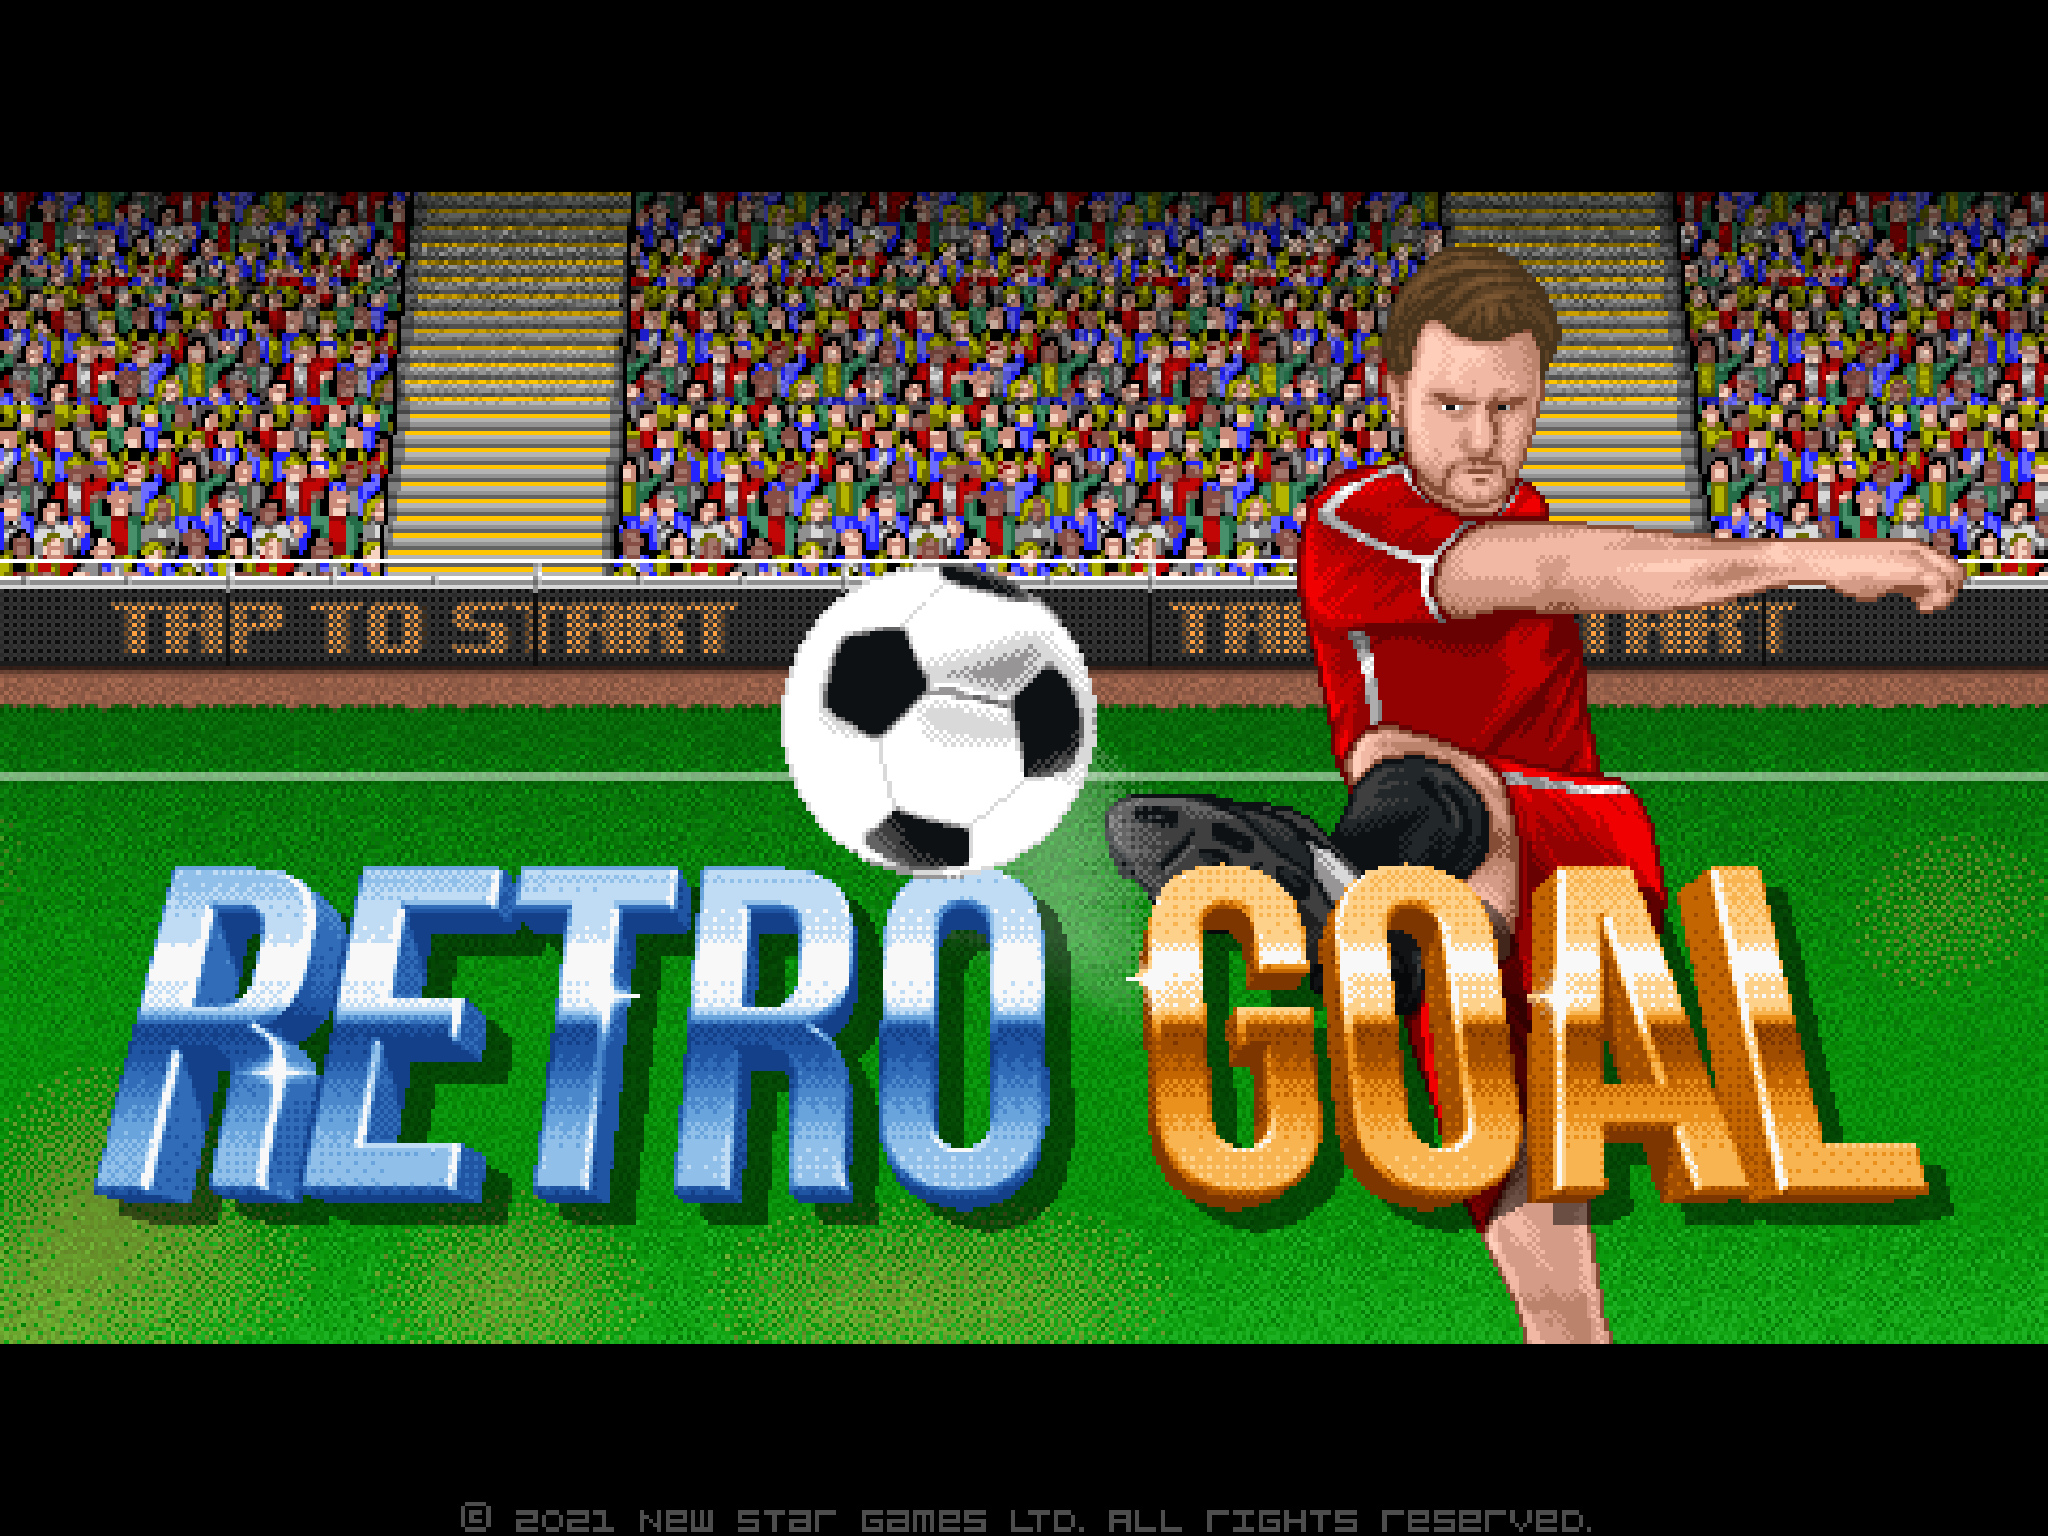 Poke Football Goal Foosball on the App Store